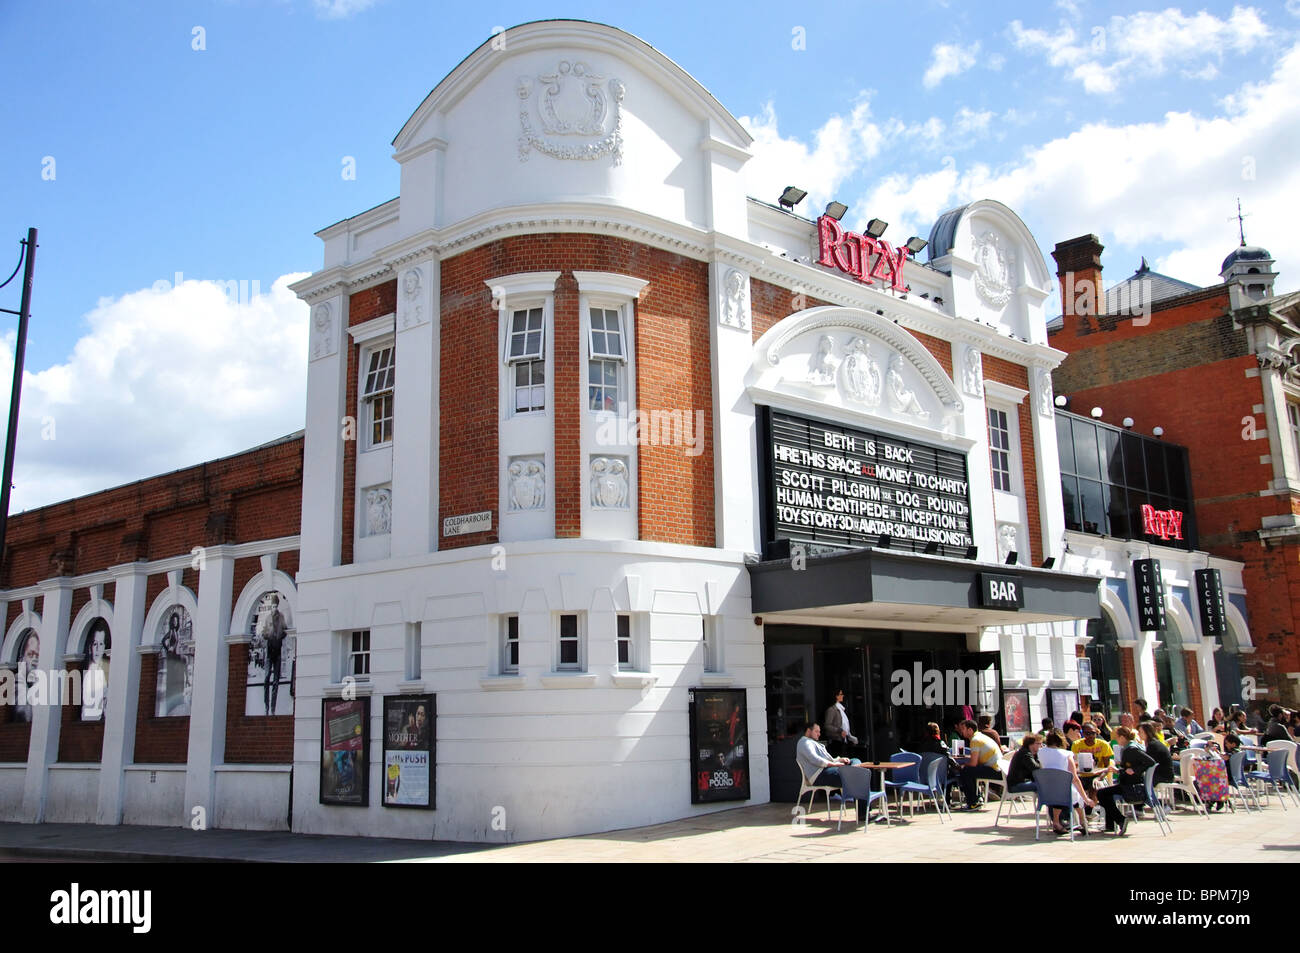 The Ritzy Cinema, Brixton Oval, Coldharbour Lane, Brixton, London Borough of Lambeth, Greater London, England, United Kingdom Stock Photo